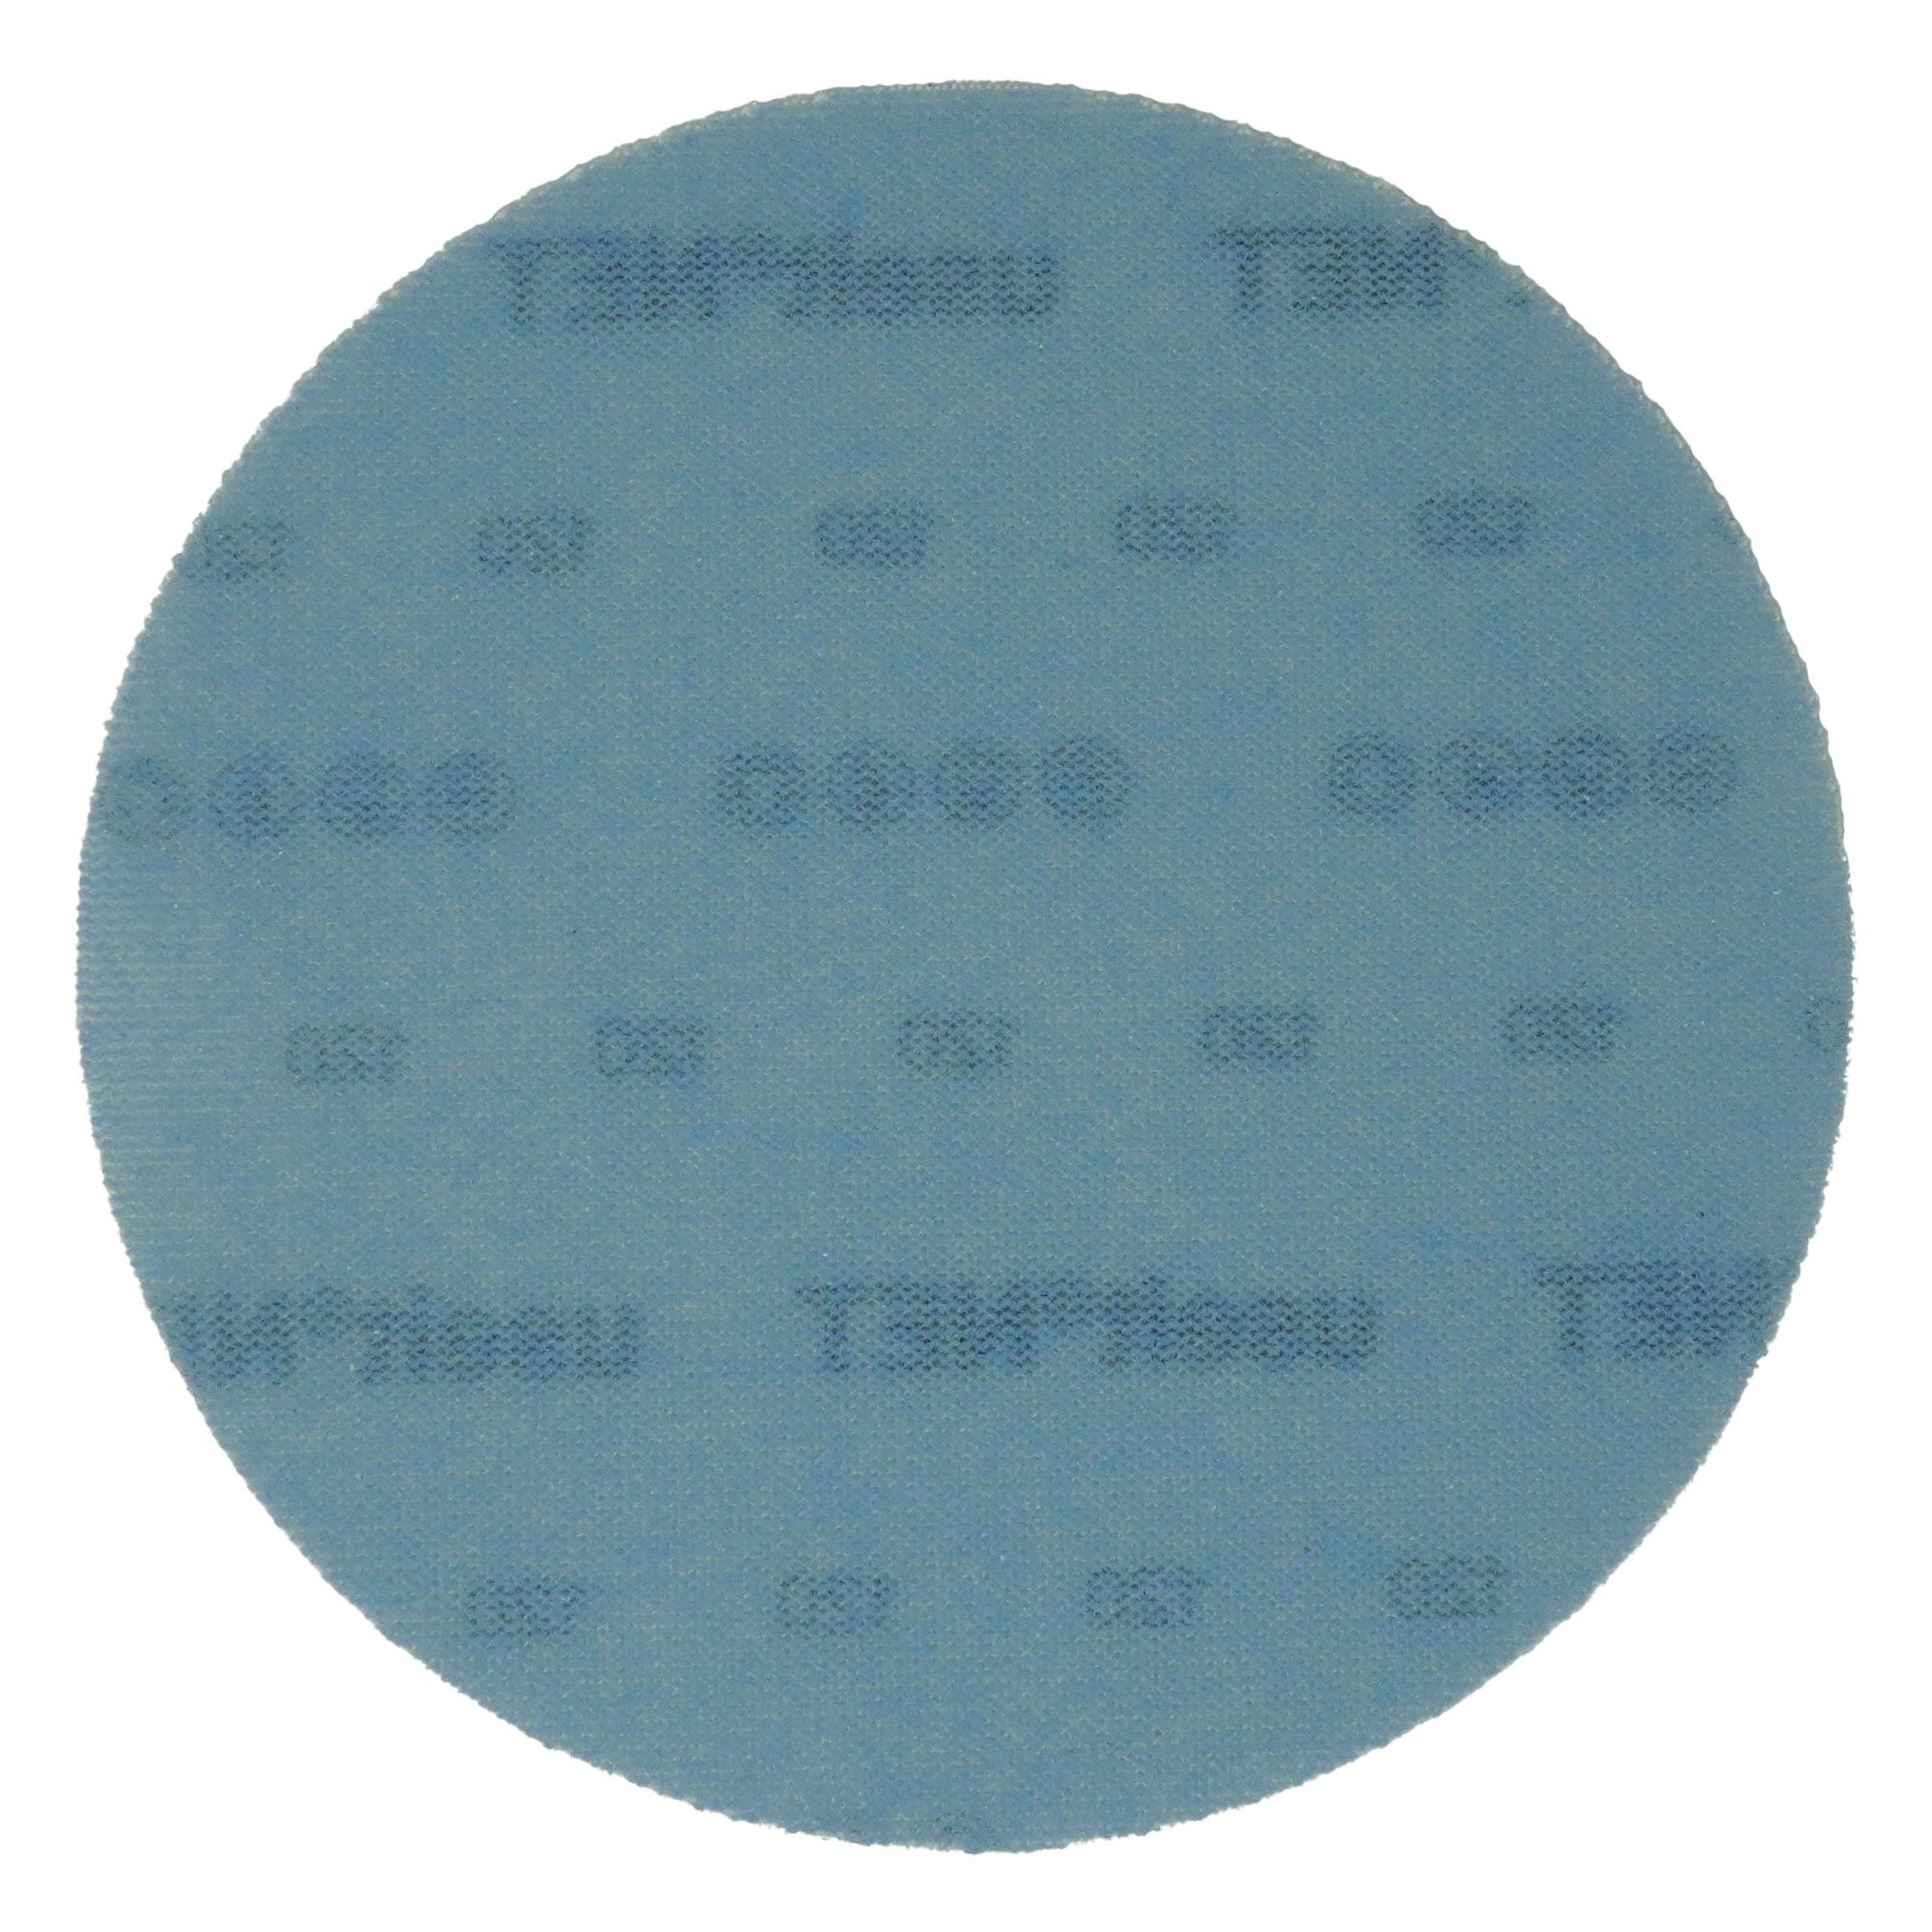 Joest 9" Round Ceramic Net Drywall Sanding Discs (10 Pack)